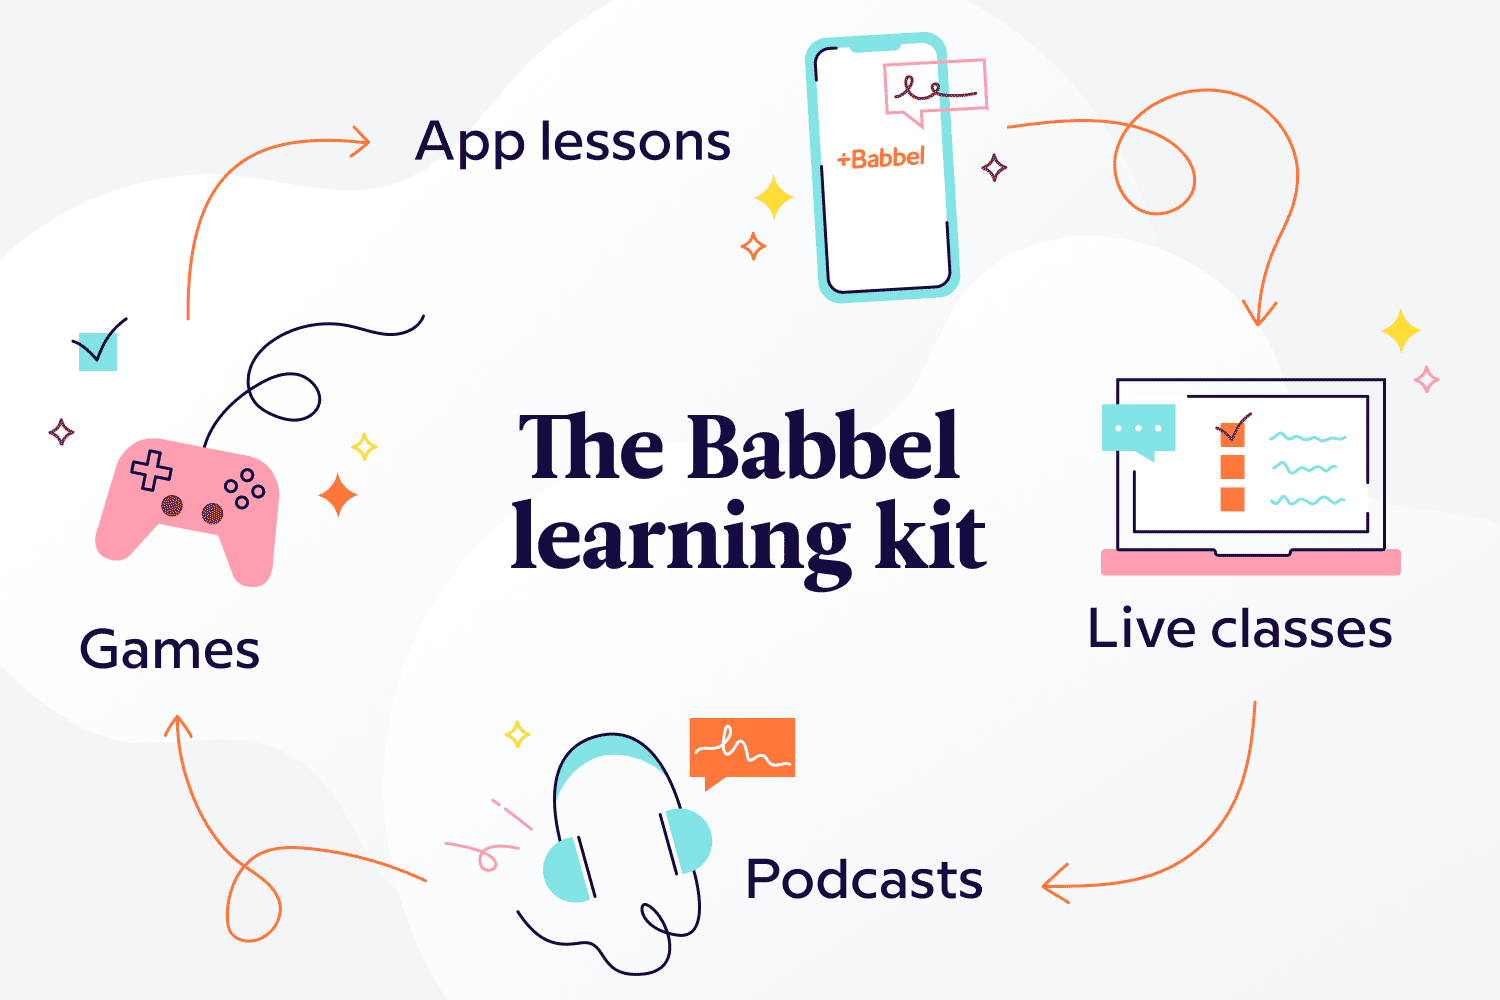 The Babbel learning kit